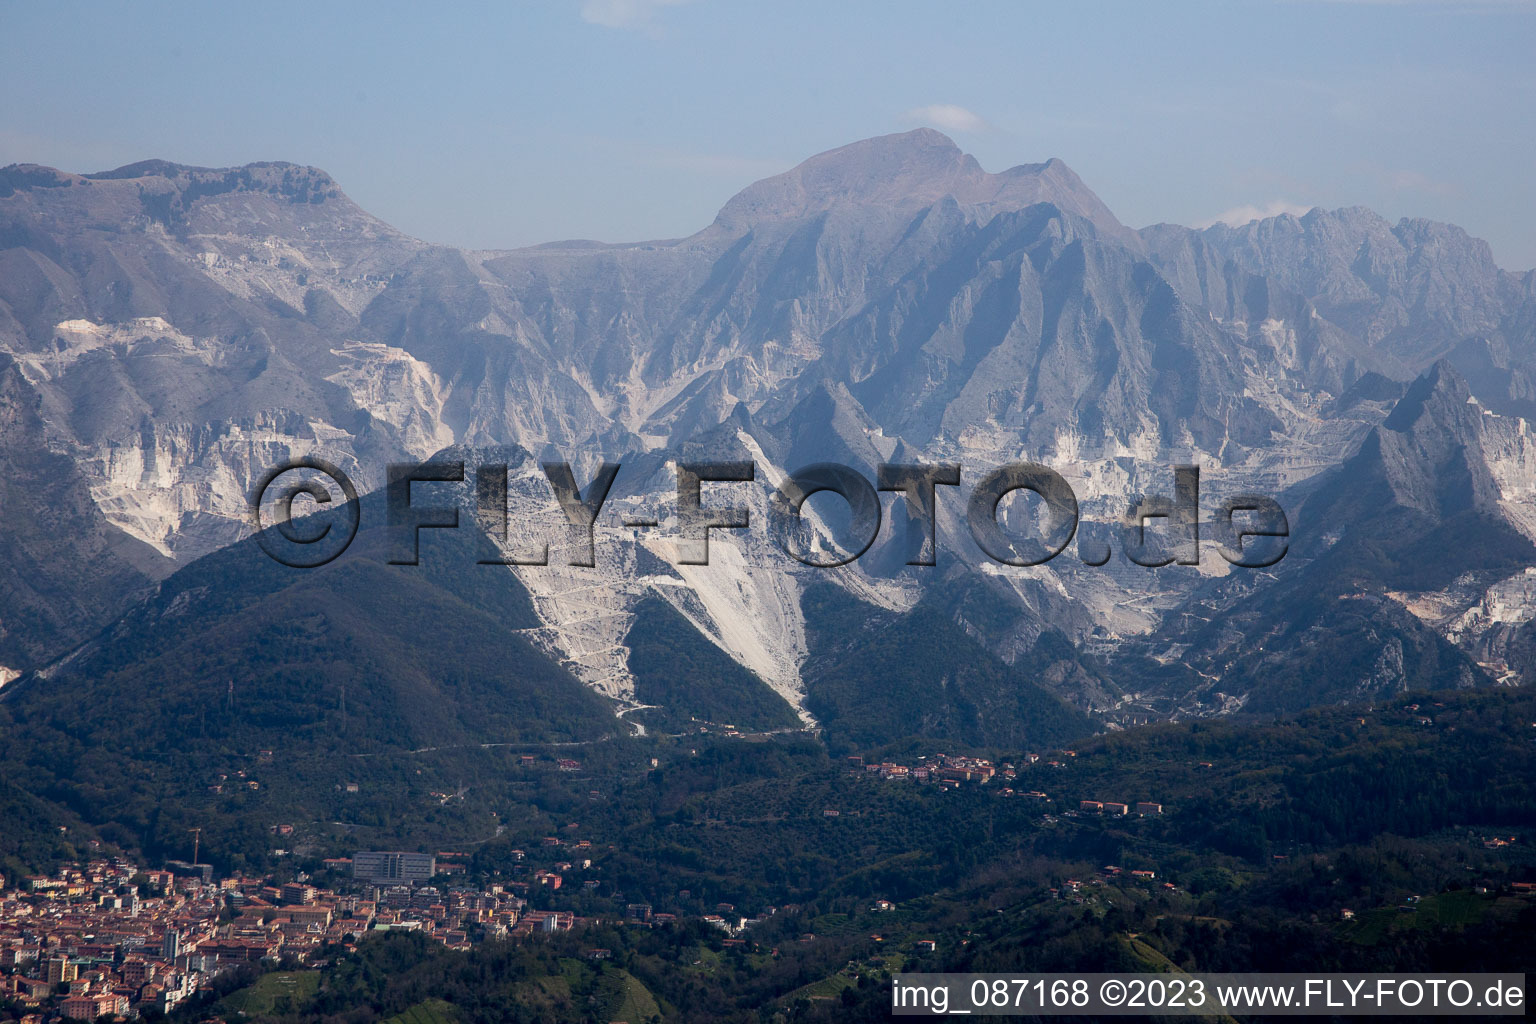 Carrara(Toskana) im Bundesland Toscana, Italien